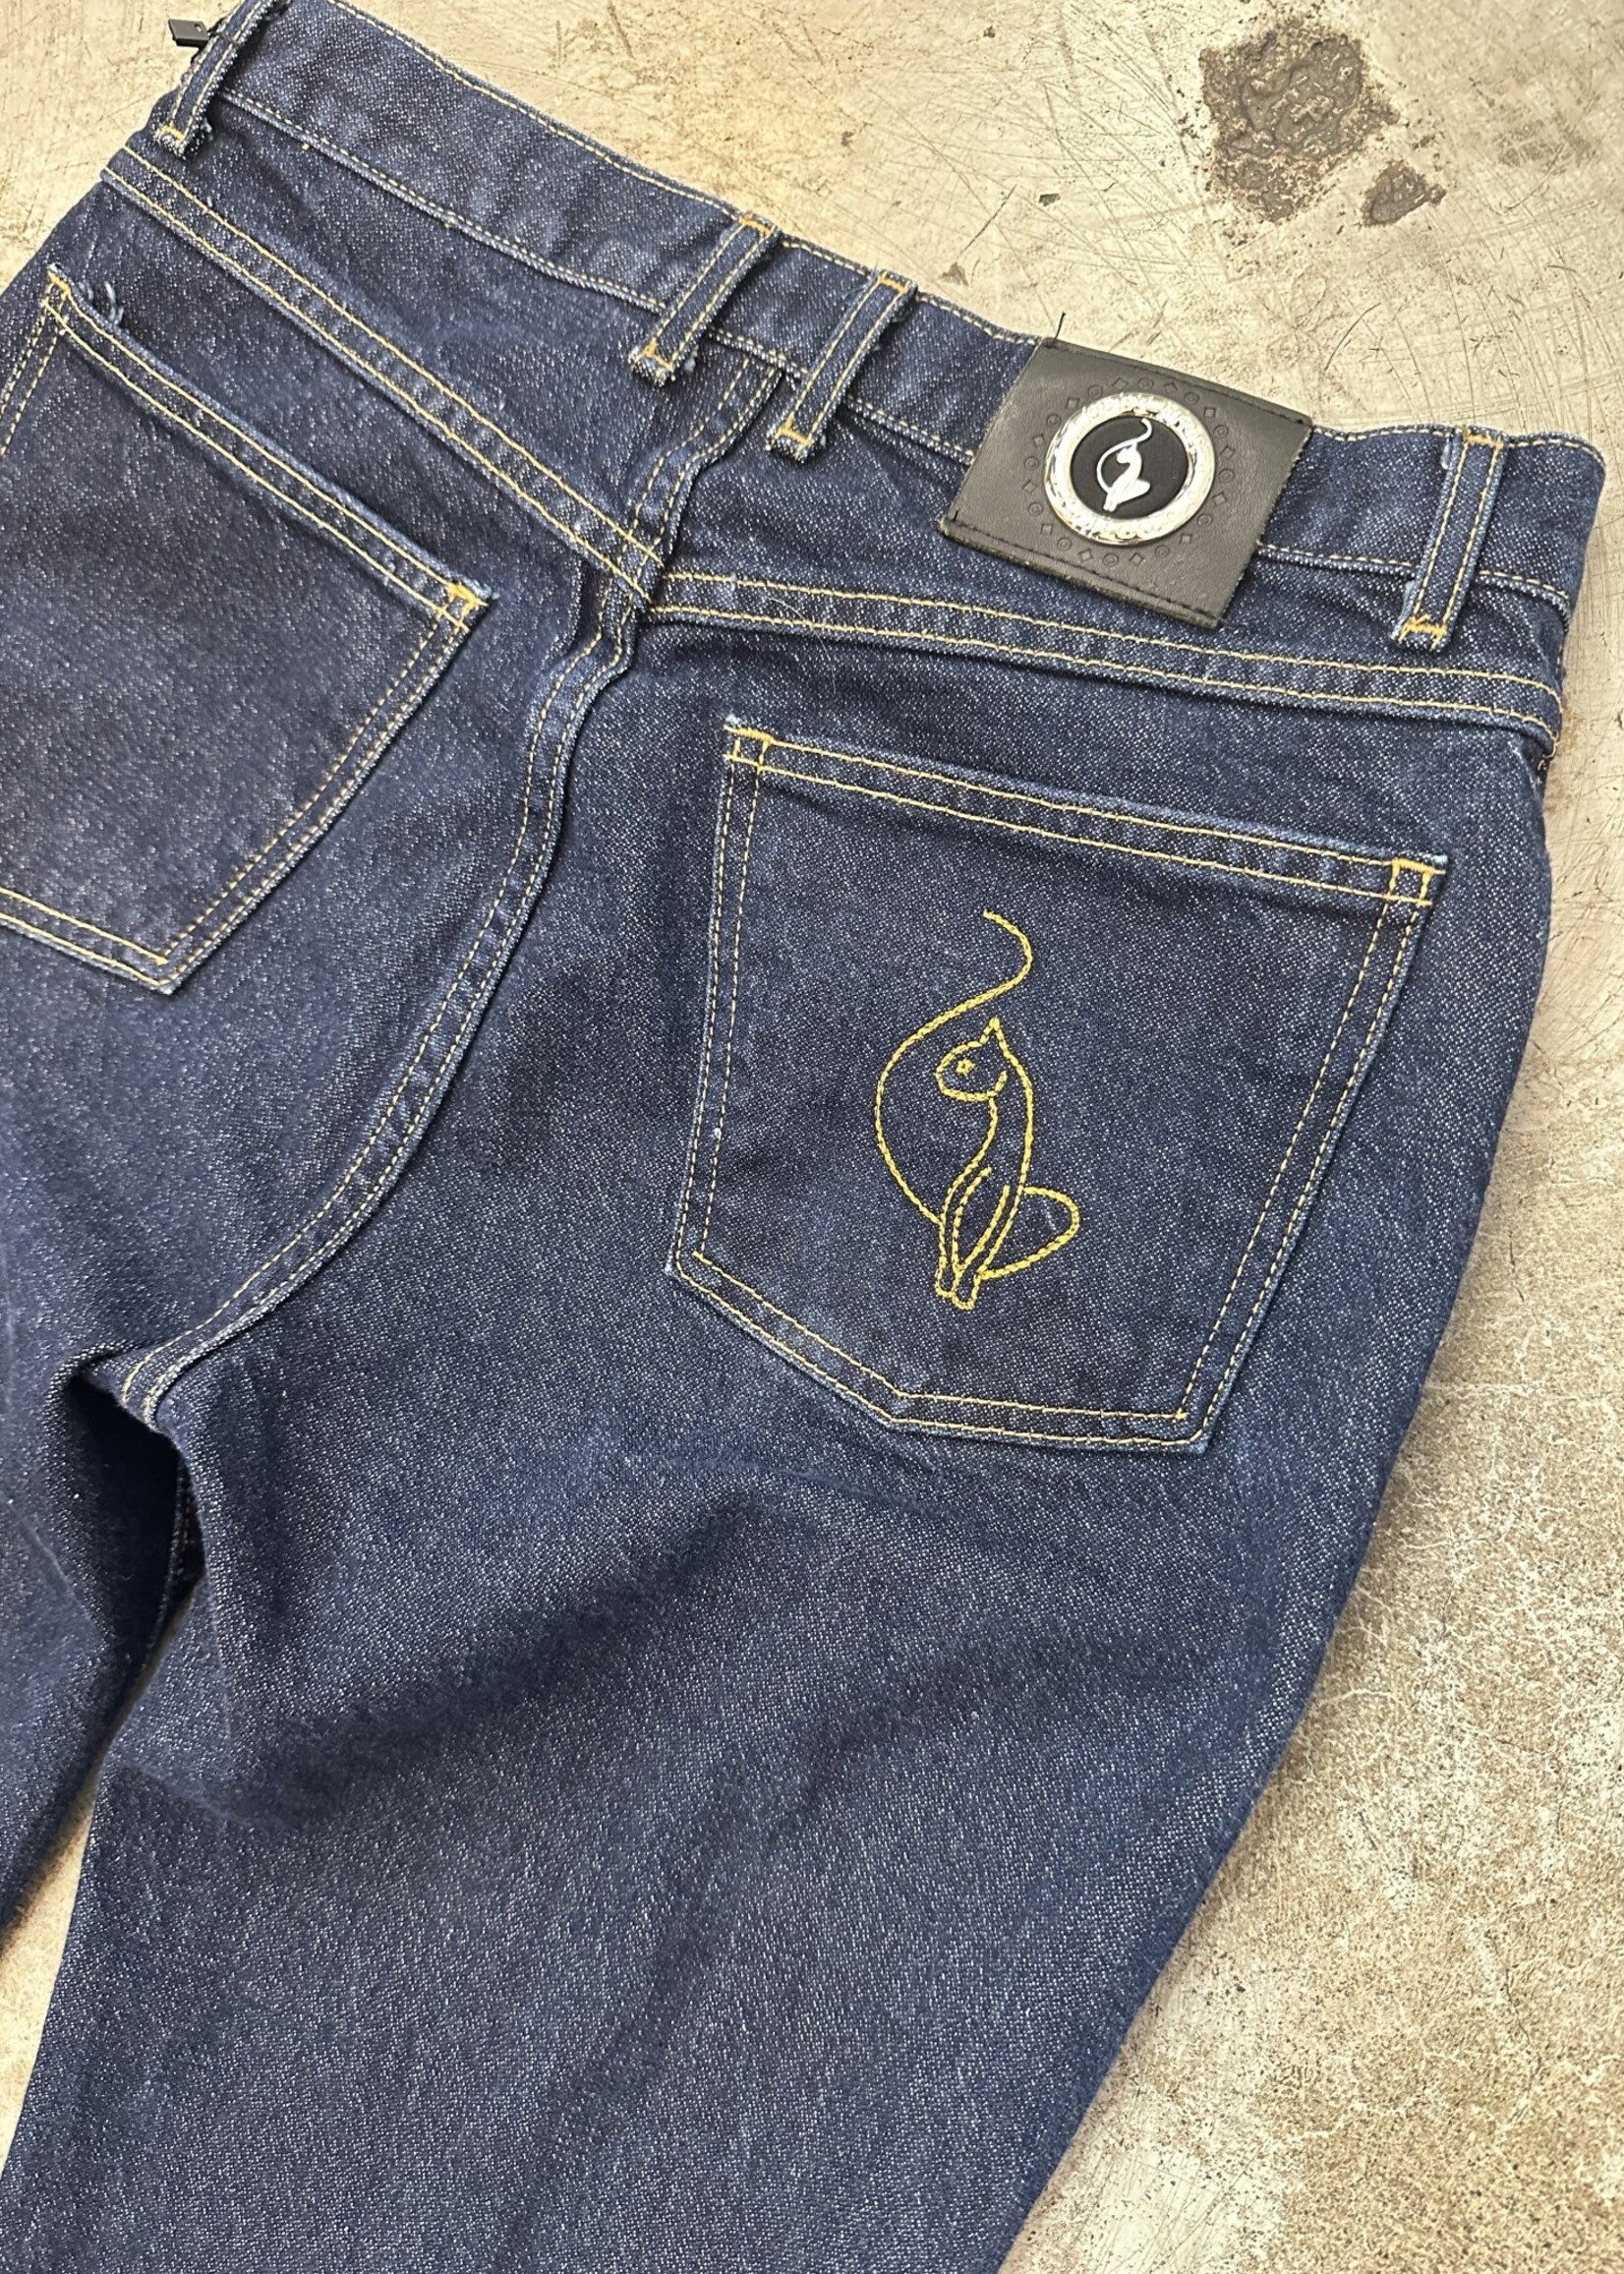 Baby Phat Vintage Dark Wash Jeans FEM 29